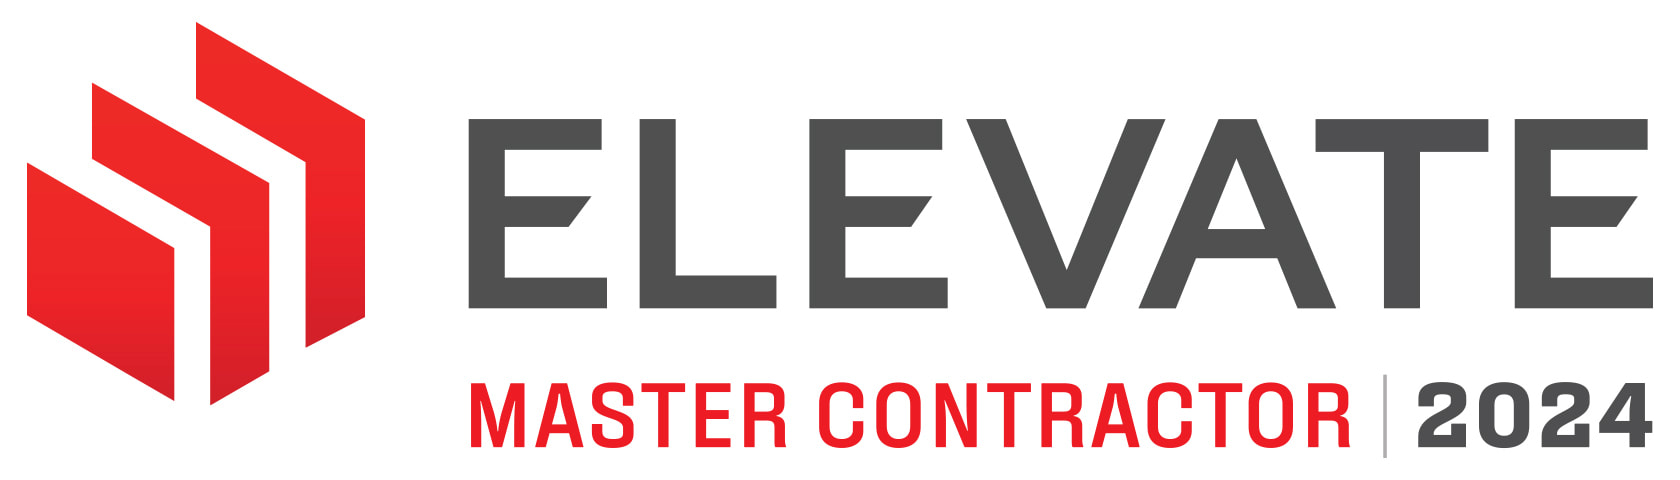 Firestone Master Contractor Silver 2018 Award Logo